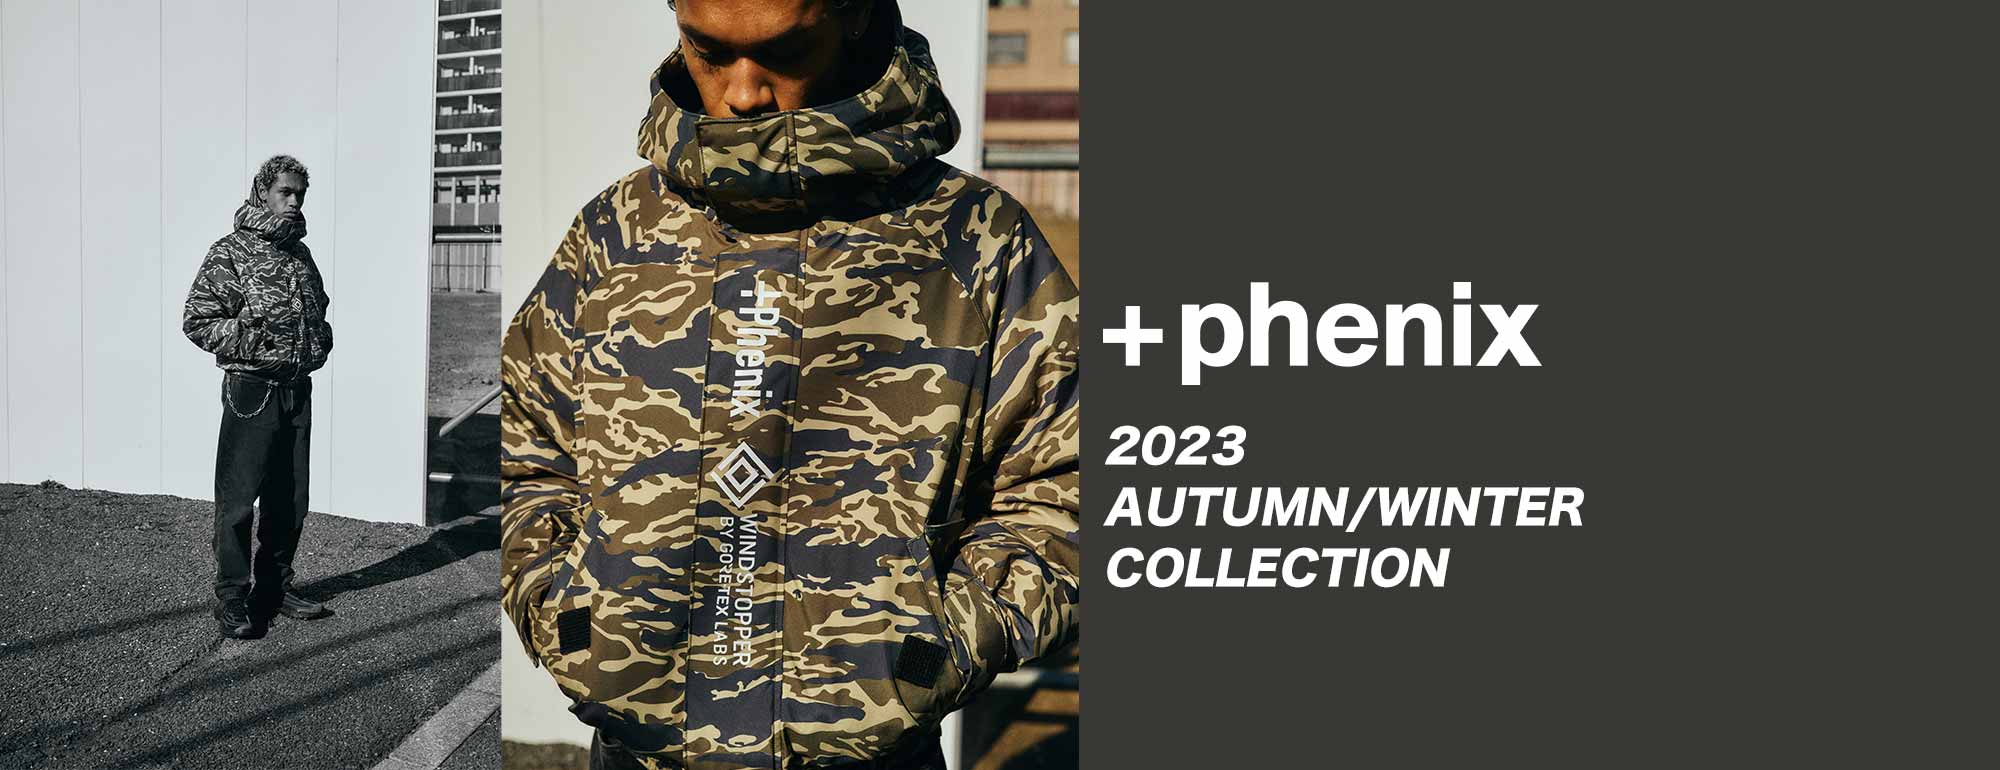 +phenix 2023 Autumn/Winter Collection